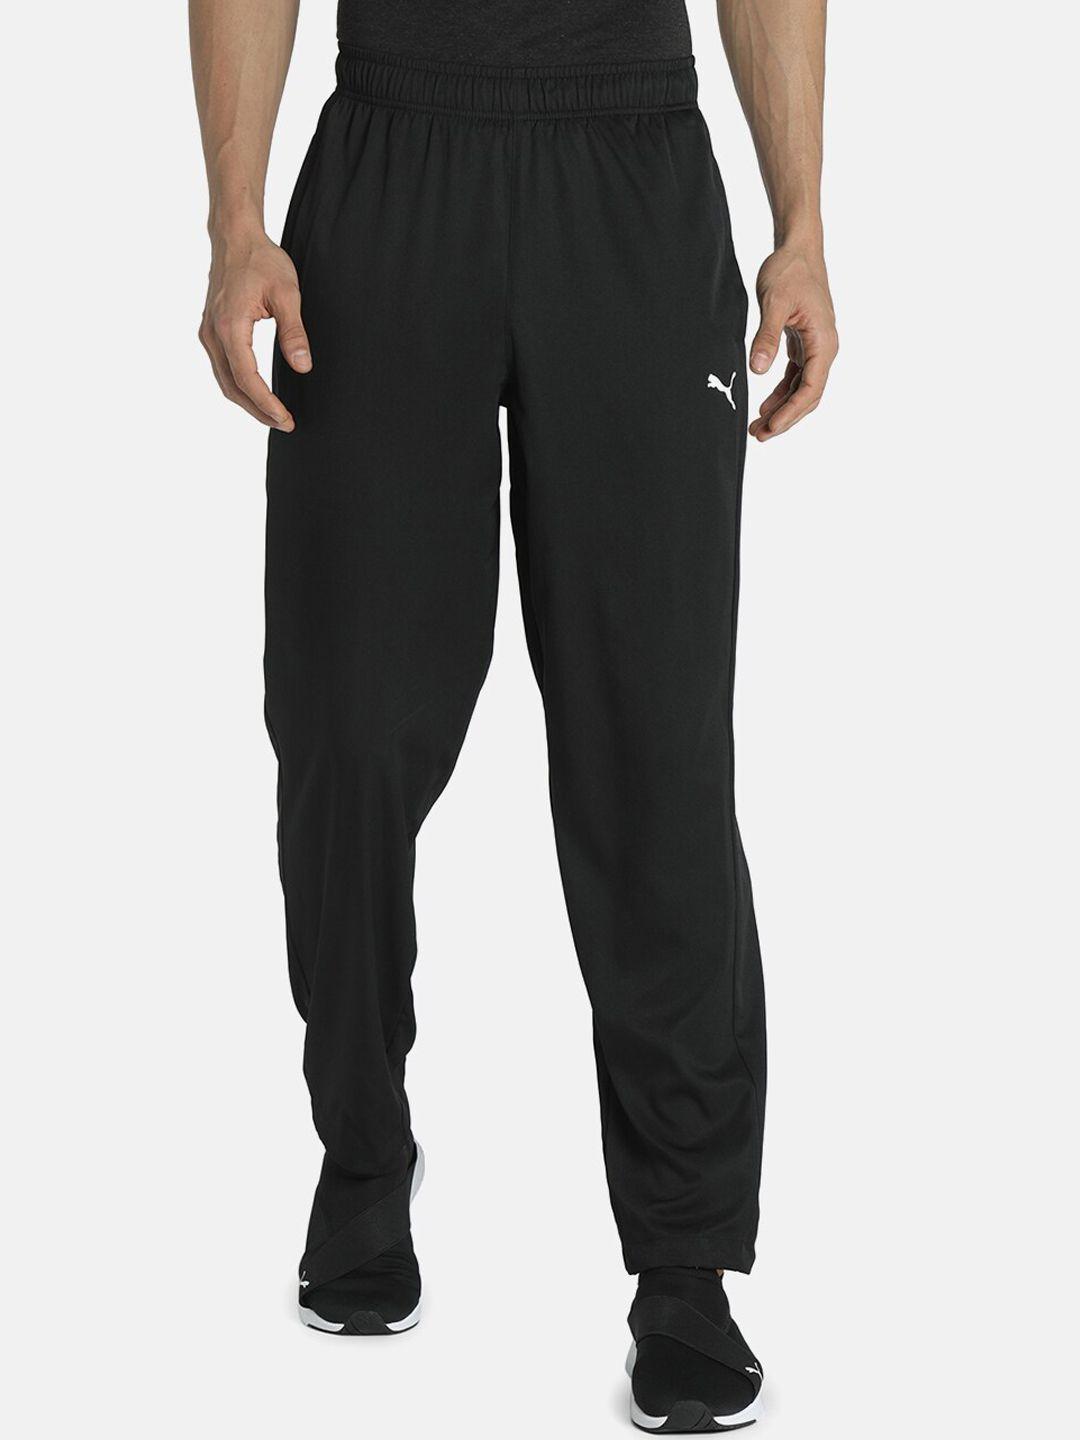 puma-essential-men-black-polyester-woven-track-pants